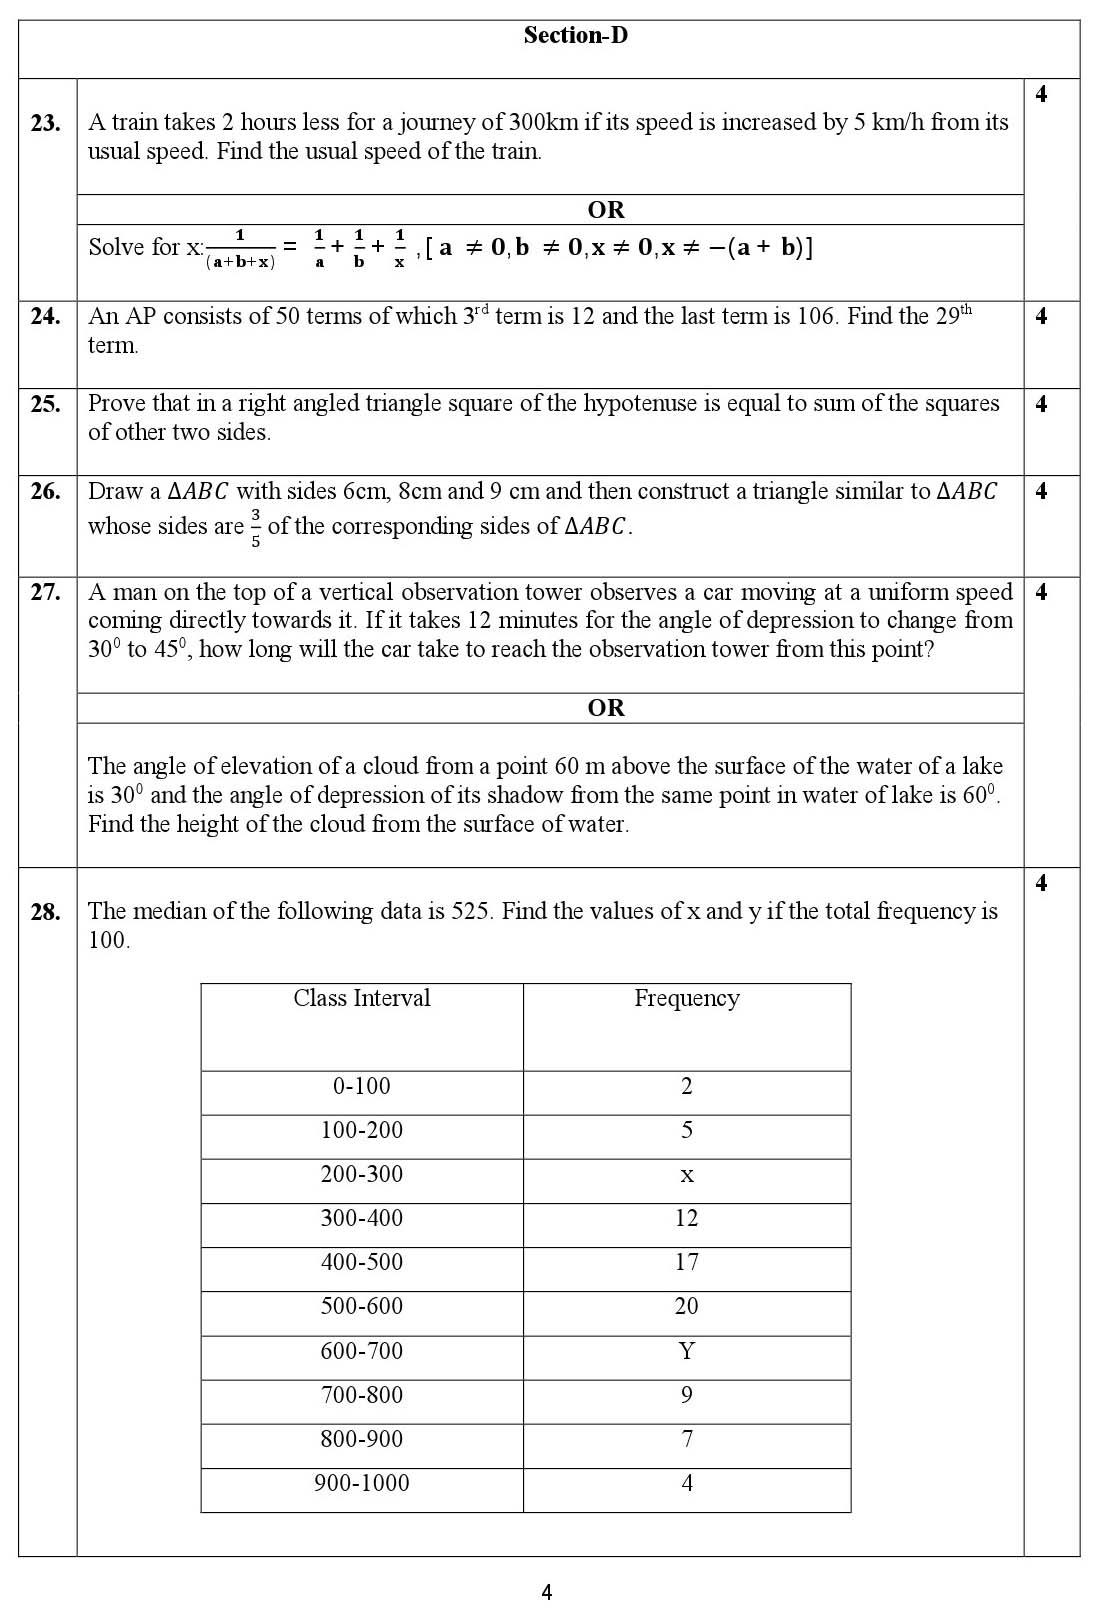 Mathematics CBSE Class X Sample Question Paper 2018 19 - Image 4